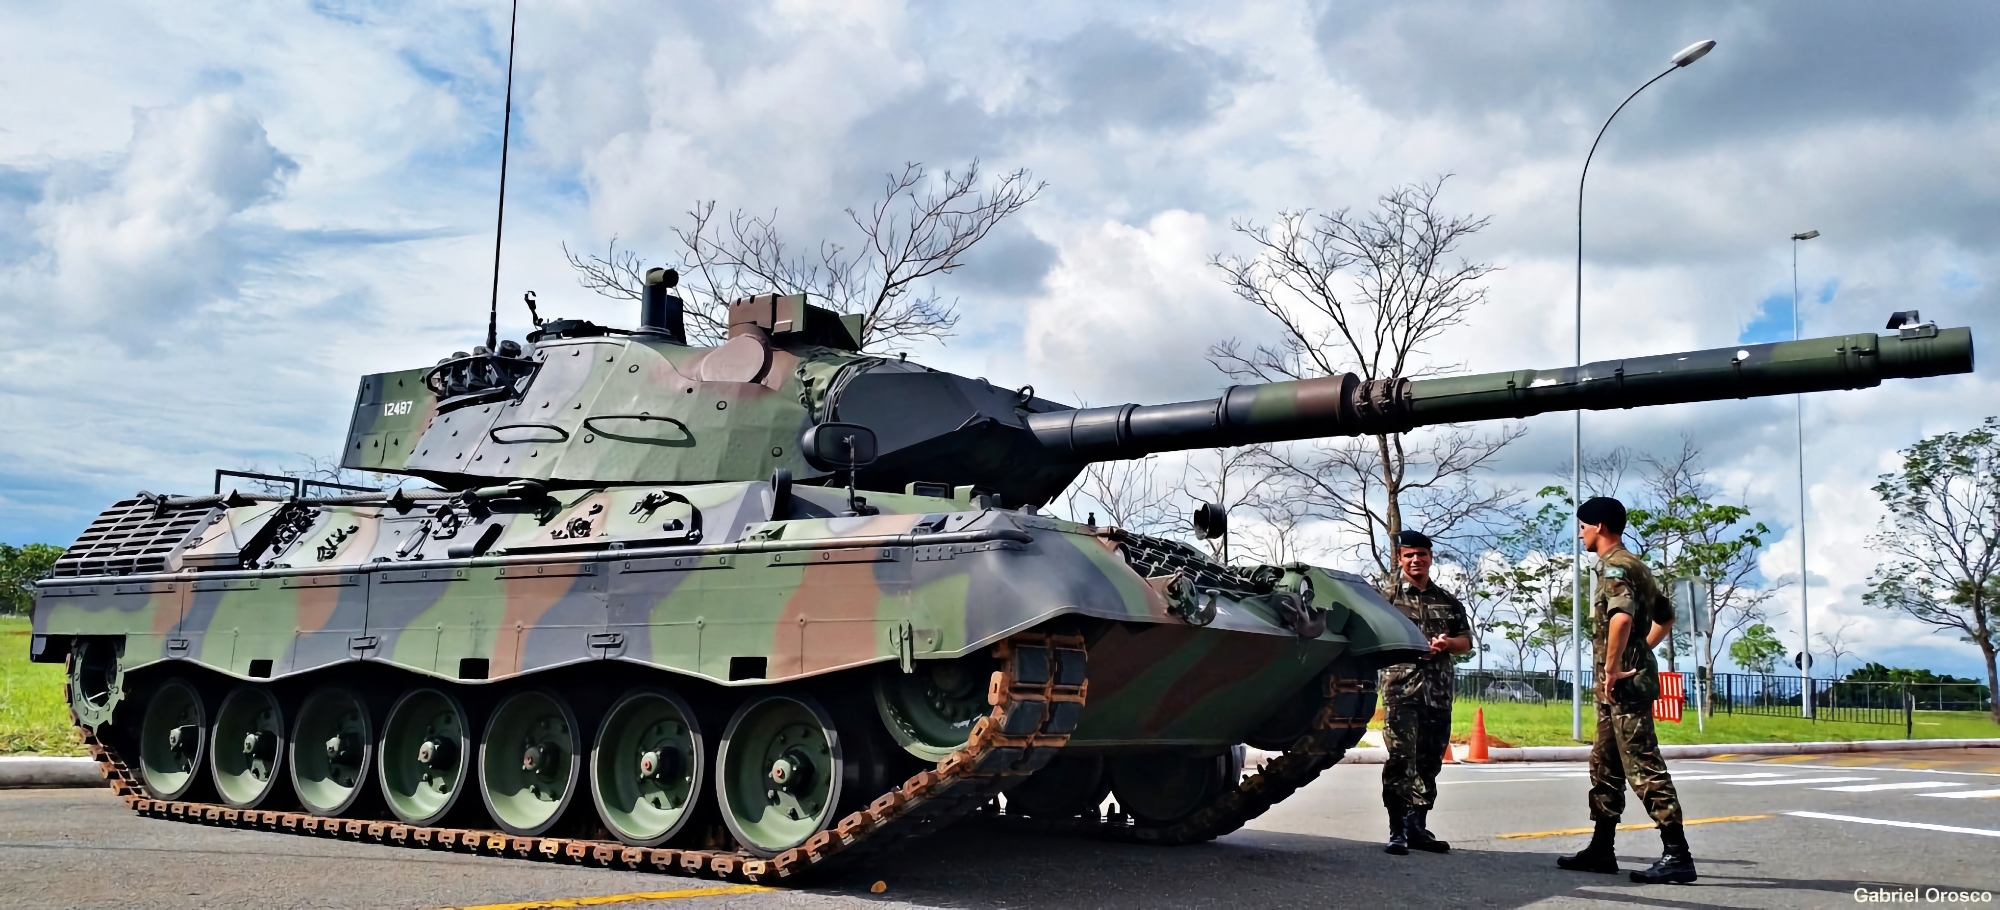 Denmark to transfer tanks, ammunition and UAVs worth 1bn euros to Ukraine